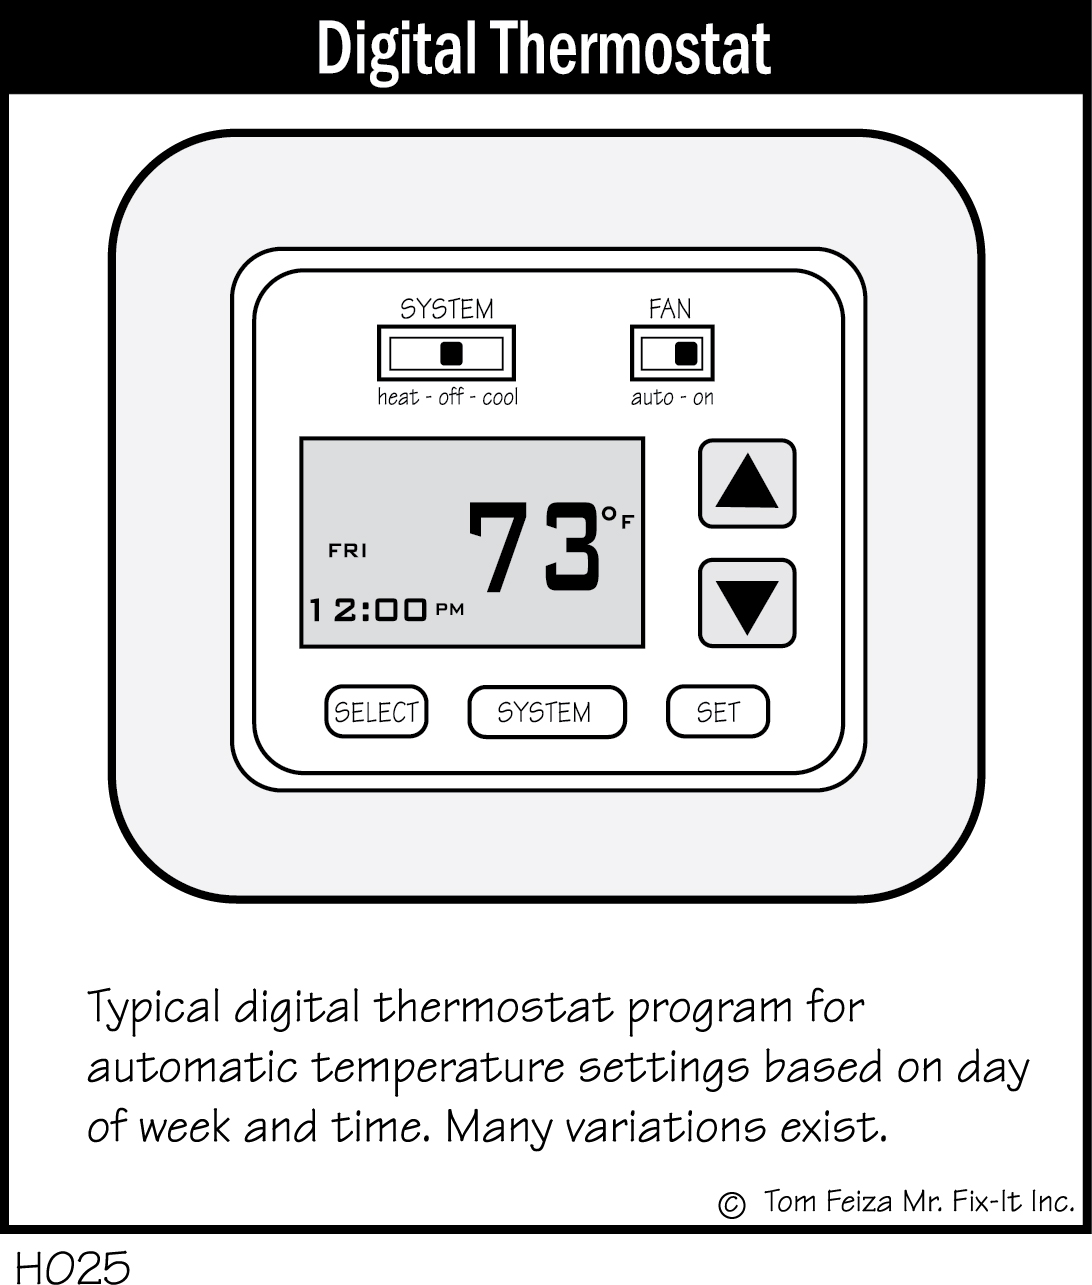 H025 - Digital Thermostat